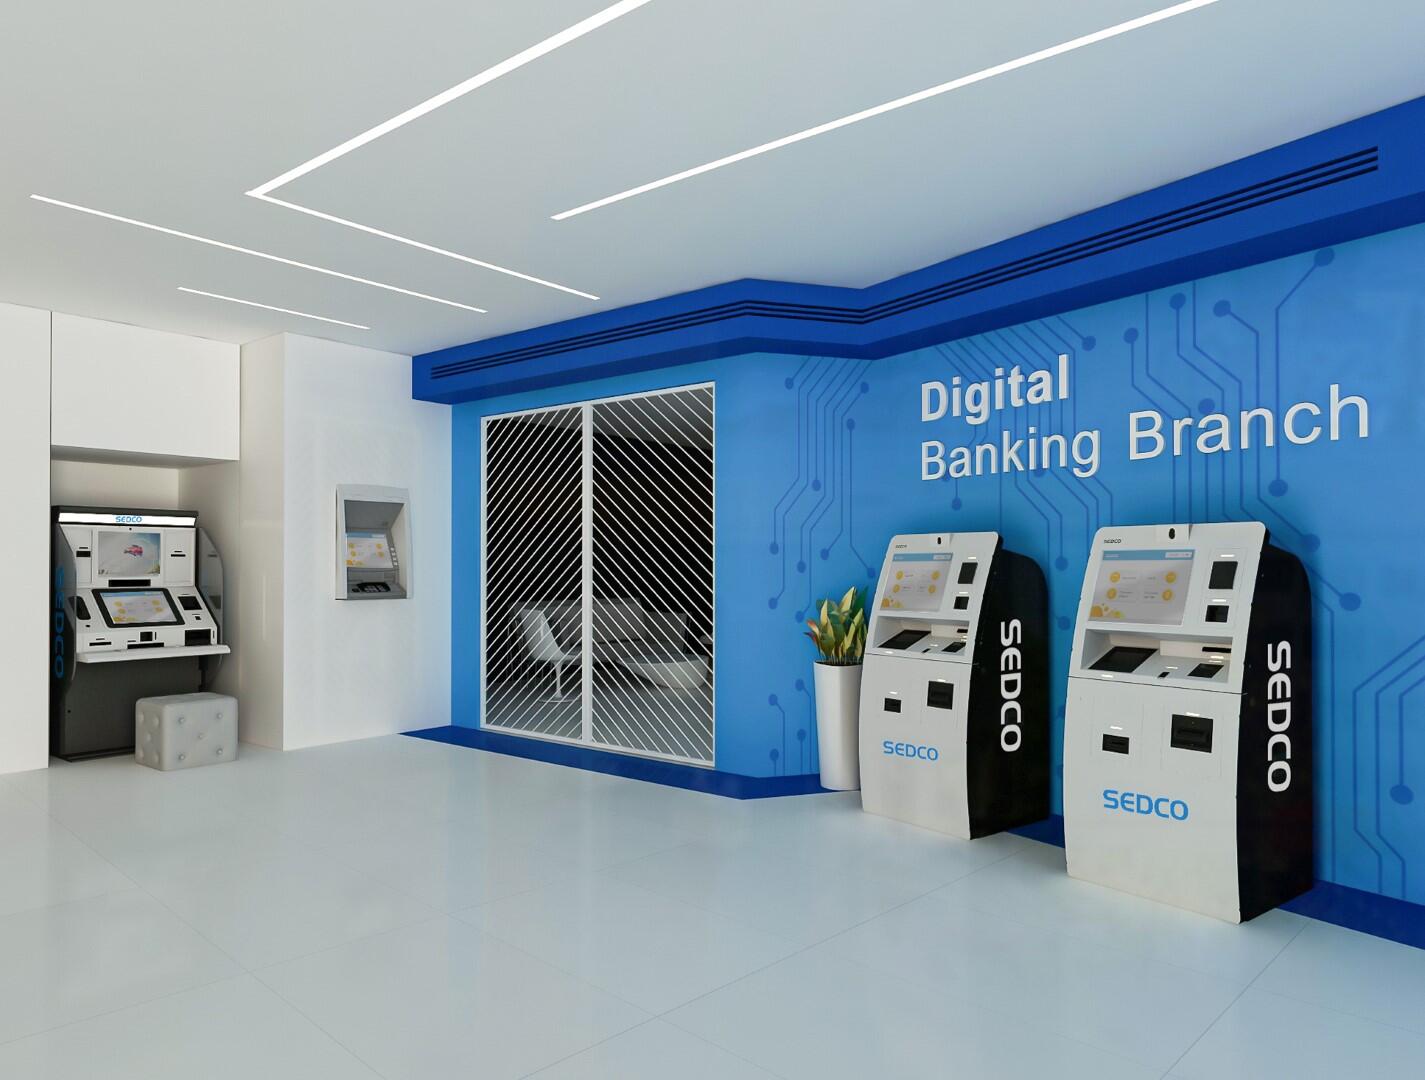 Smart digital banking branch - SEDCO